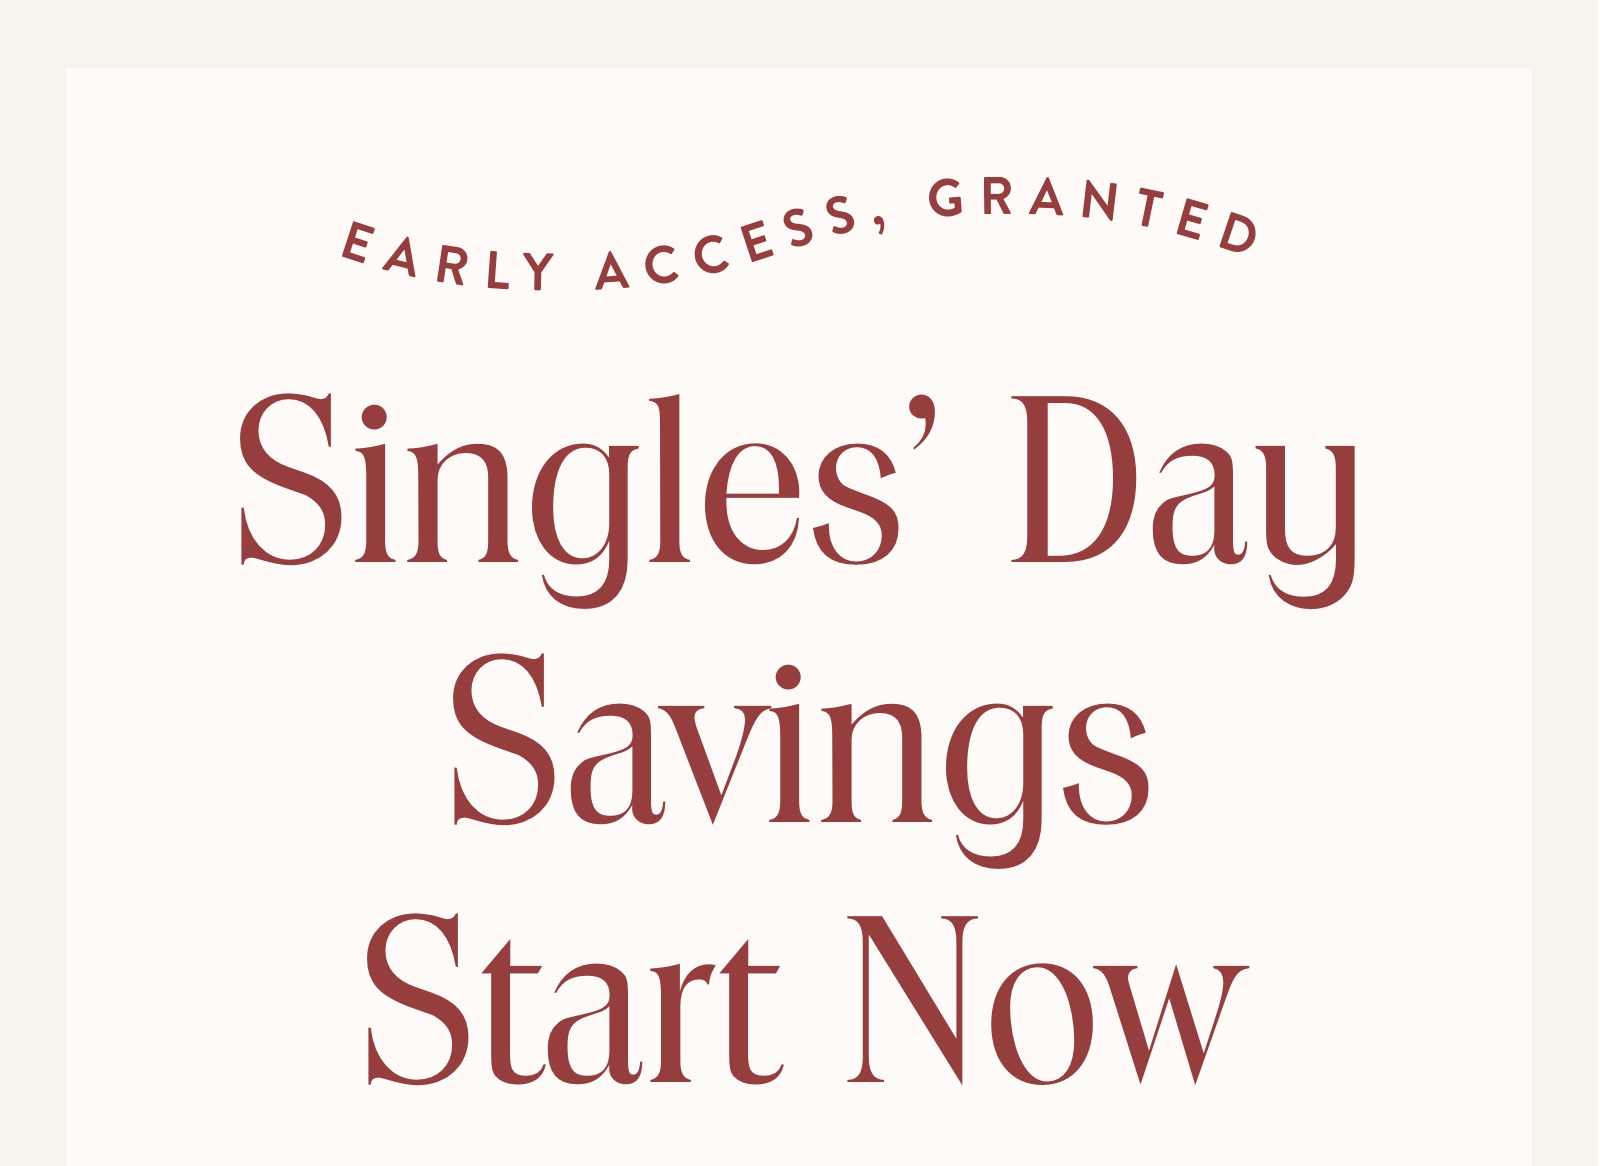 Singles' Day Savings Start Now